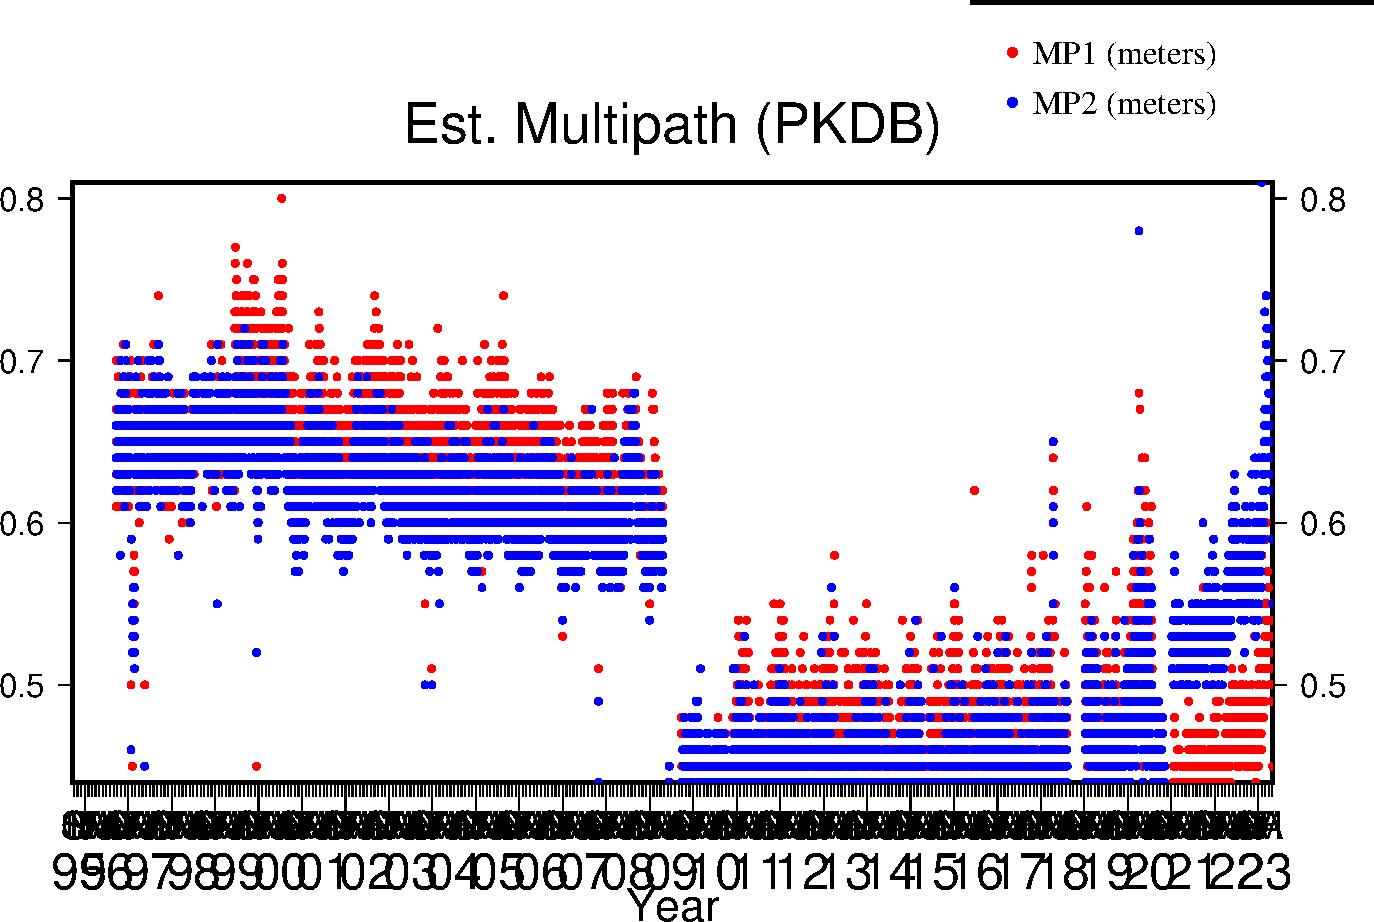 PKDB multipath last year